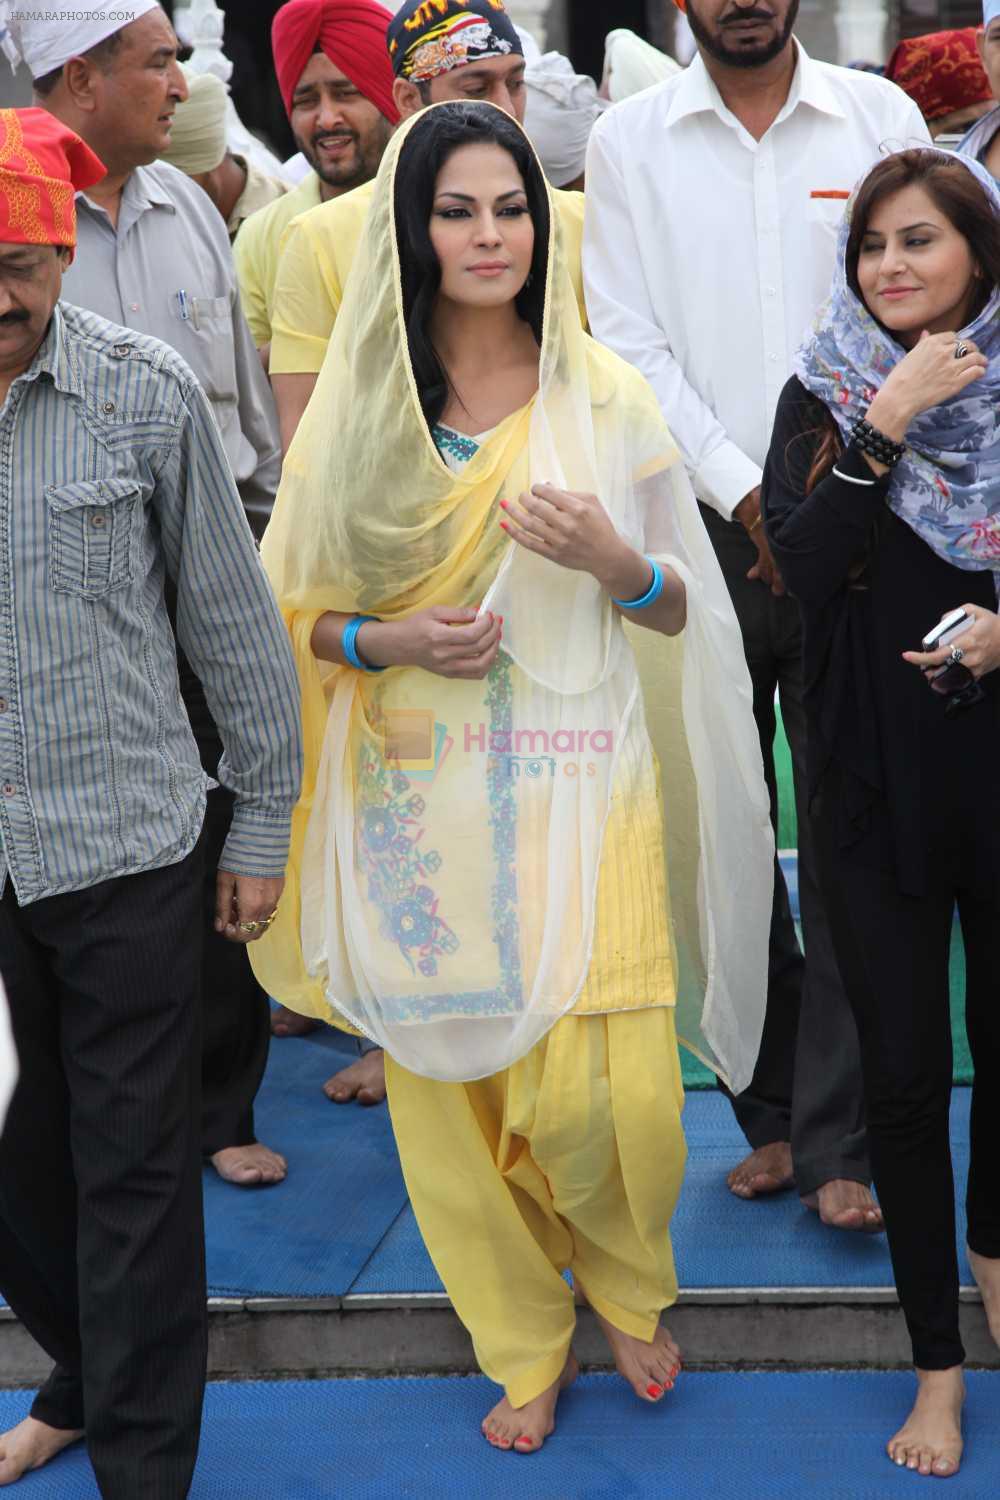 Veena Mali at Gurudwara6